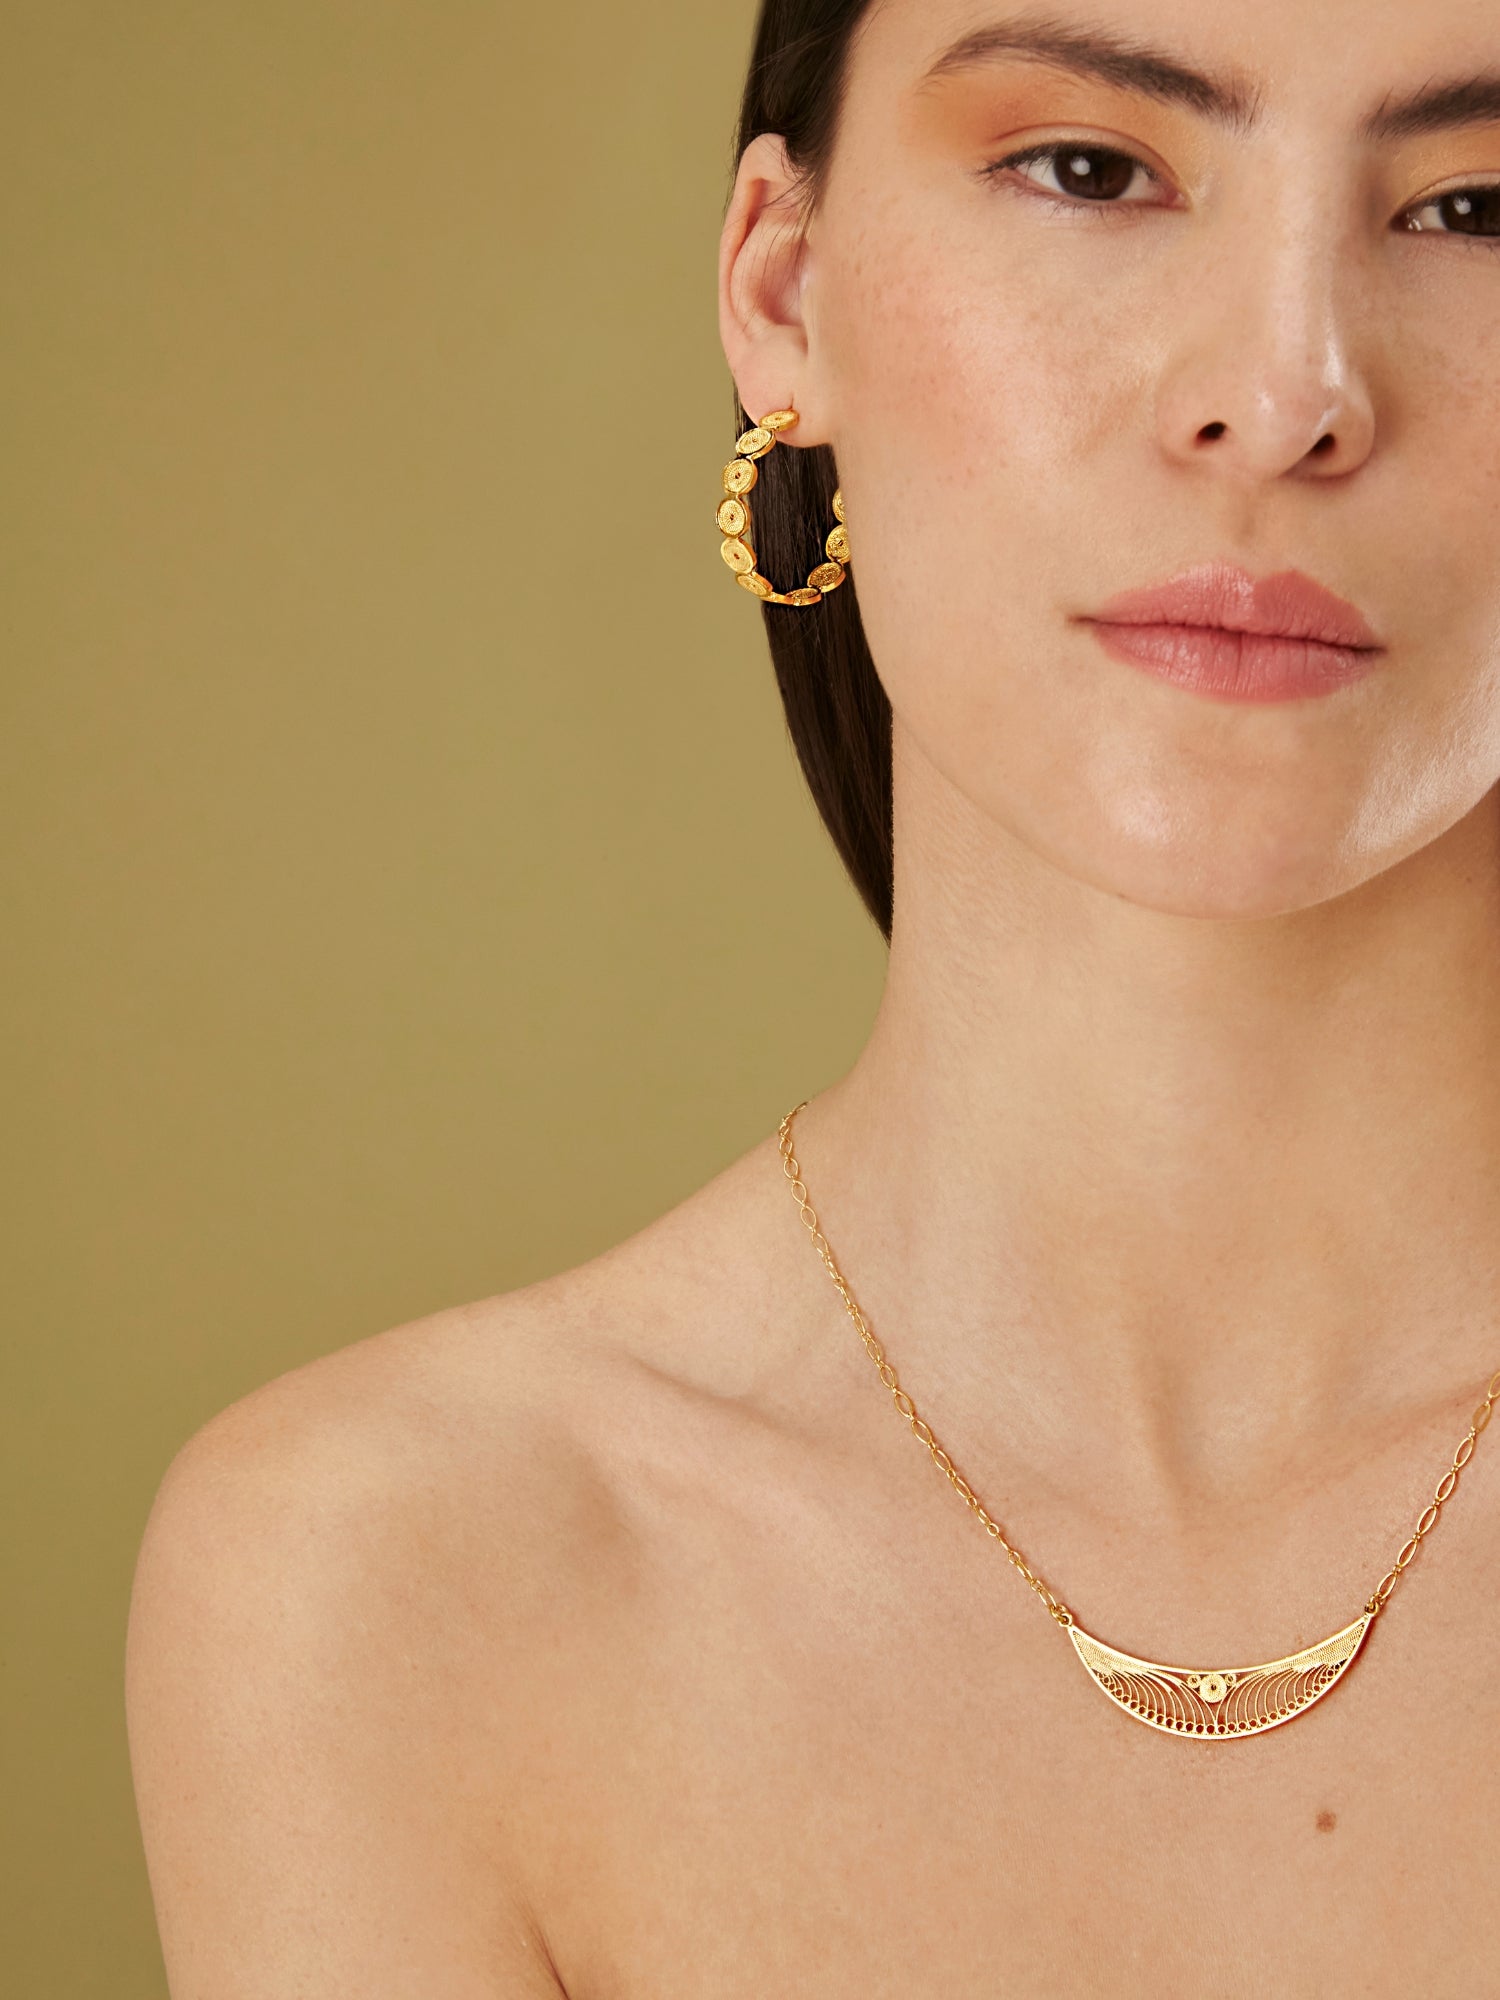 Lauren 18k Gold Vermeil Plated Filigree Adjustable Pendant Necklace - 18" - Necklaces